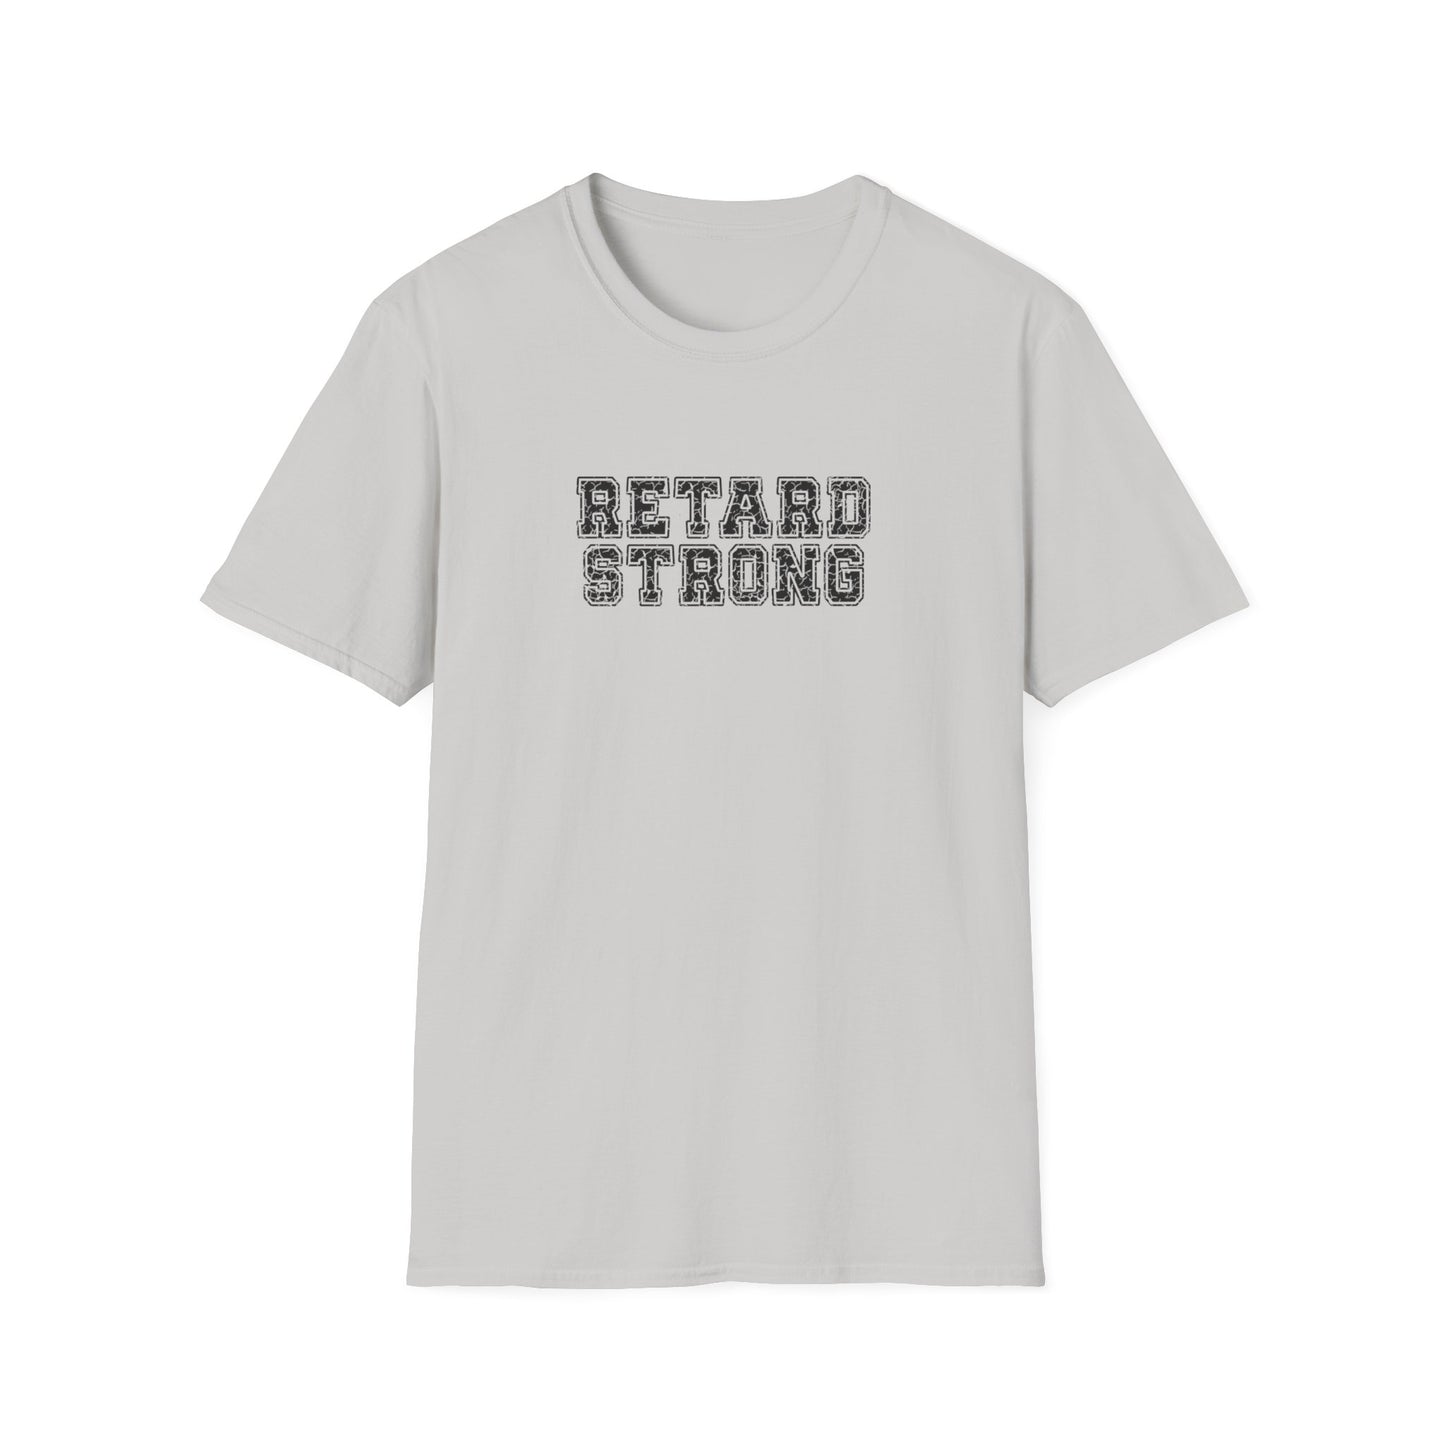 Retard Strong - T-Shirt